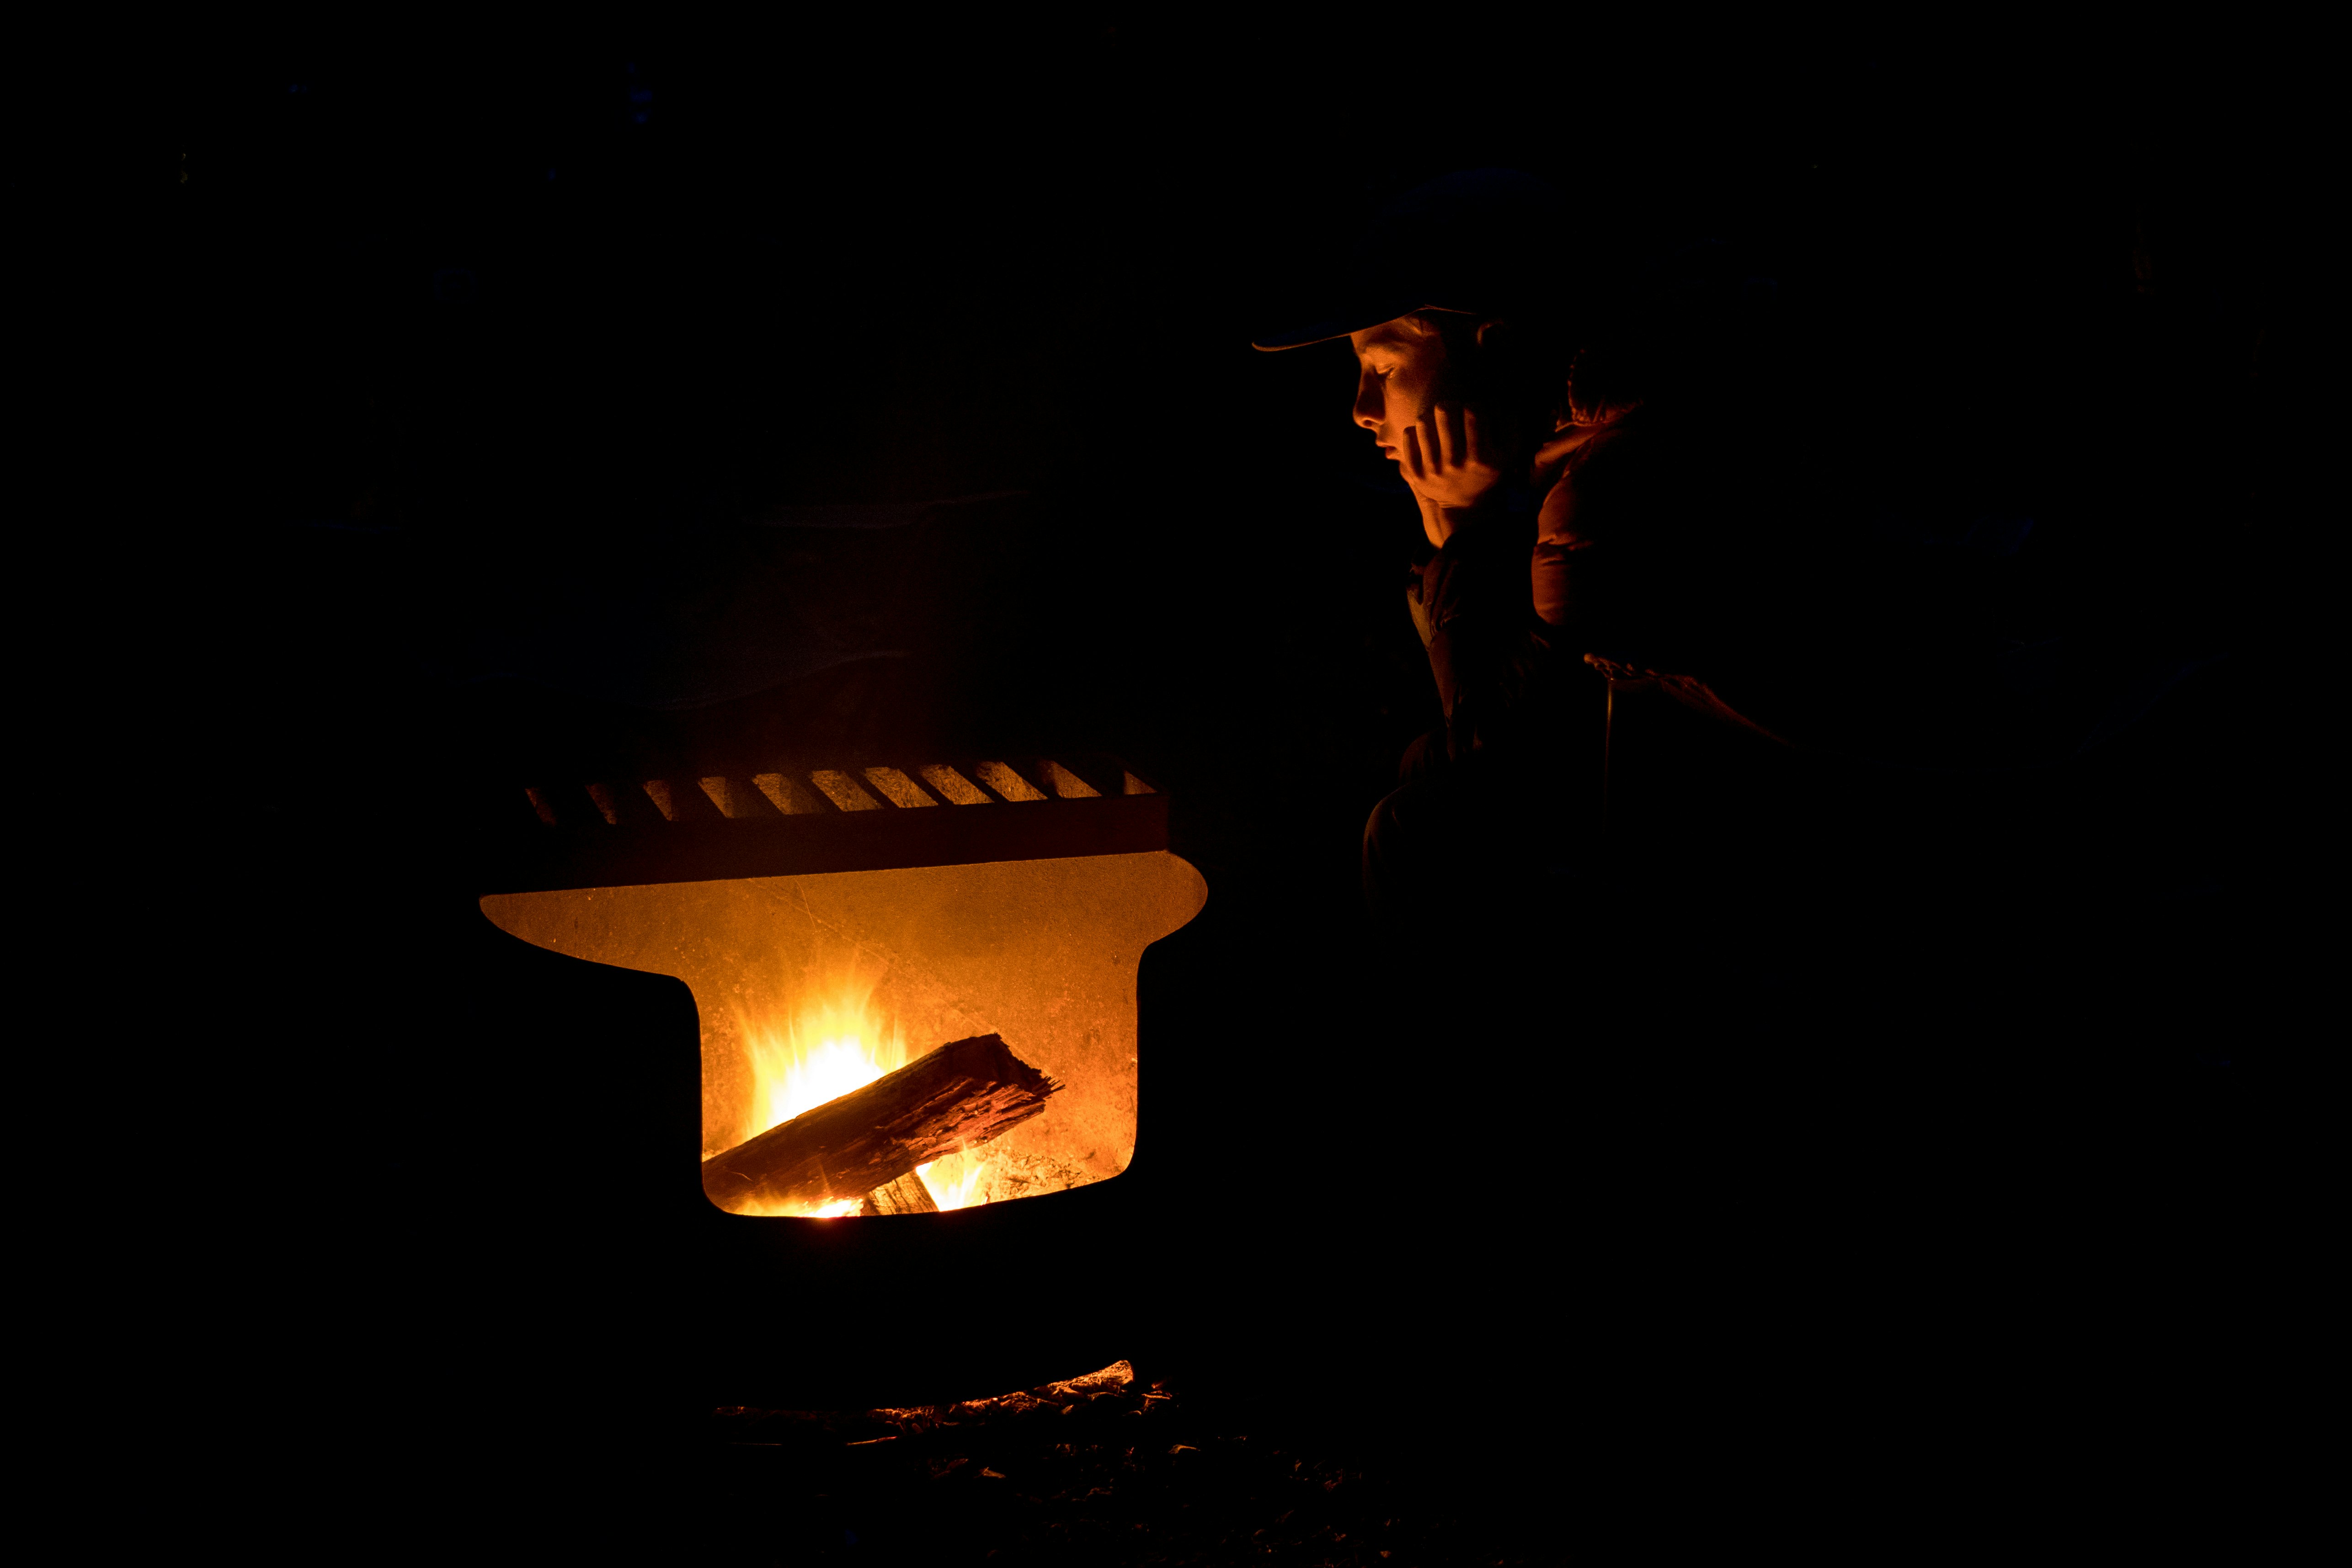 silhouette of man wearing hat standing near fire pit